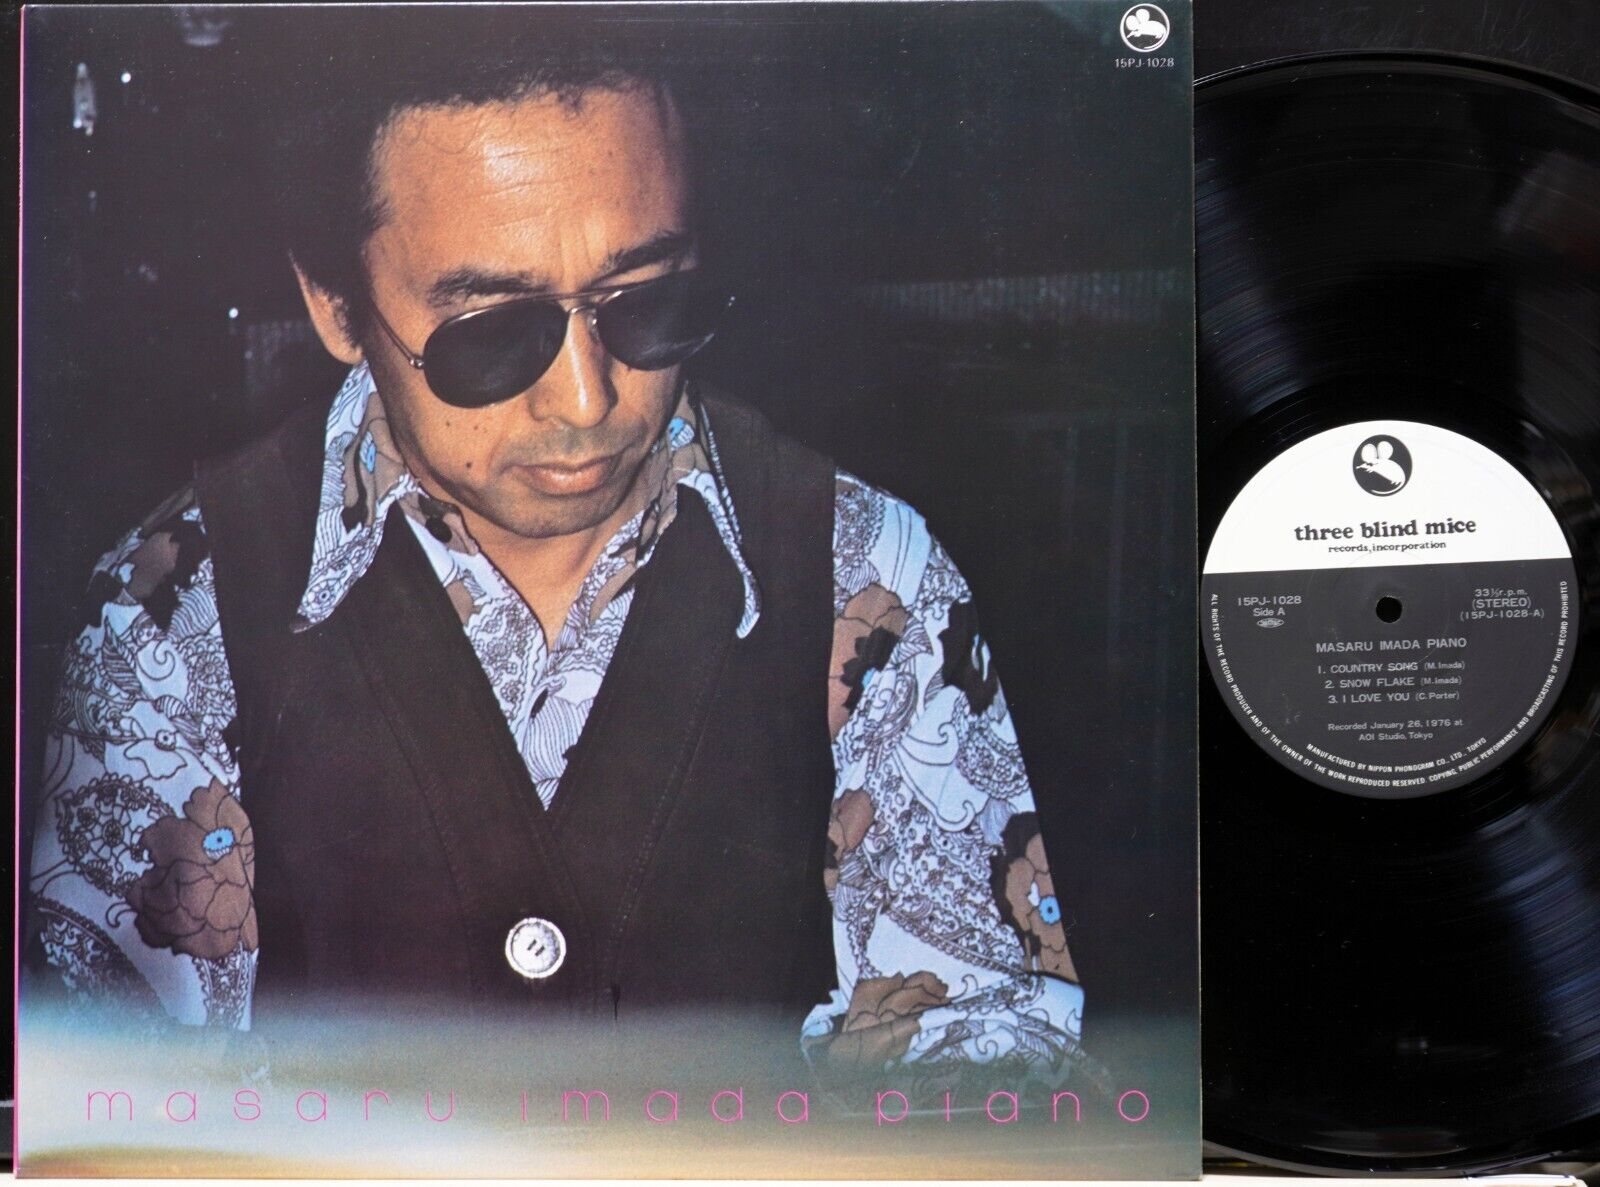 MASARU IMADA "PIANO" THREE BLIND MICE 15J-1028 Japan LP Vinyl  EX/EX